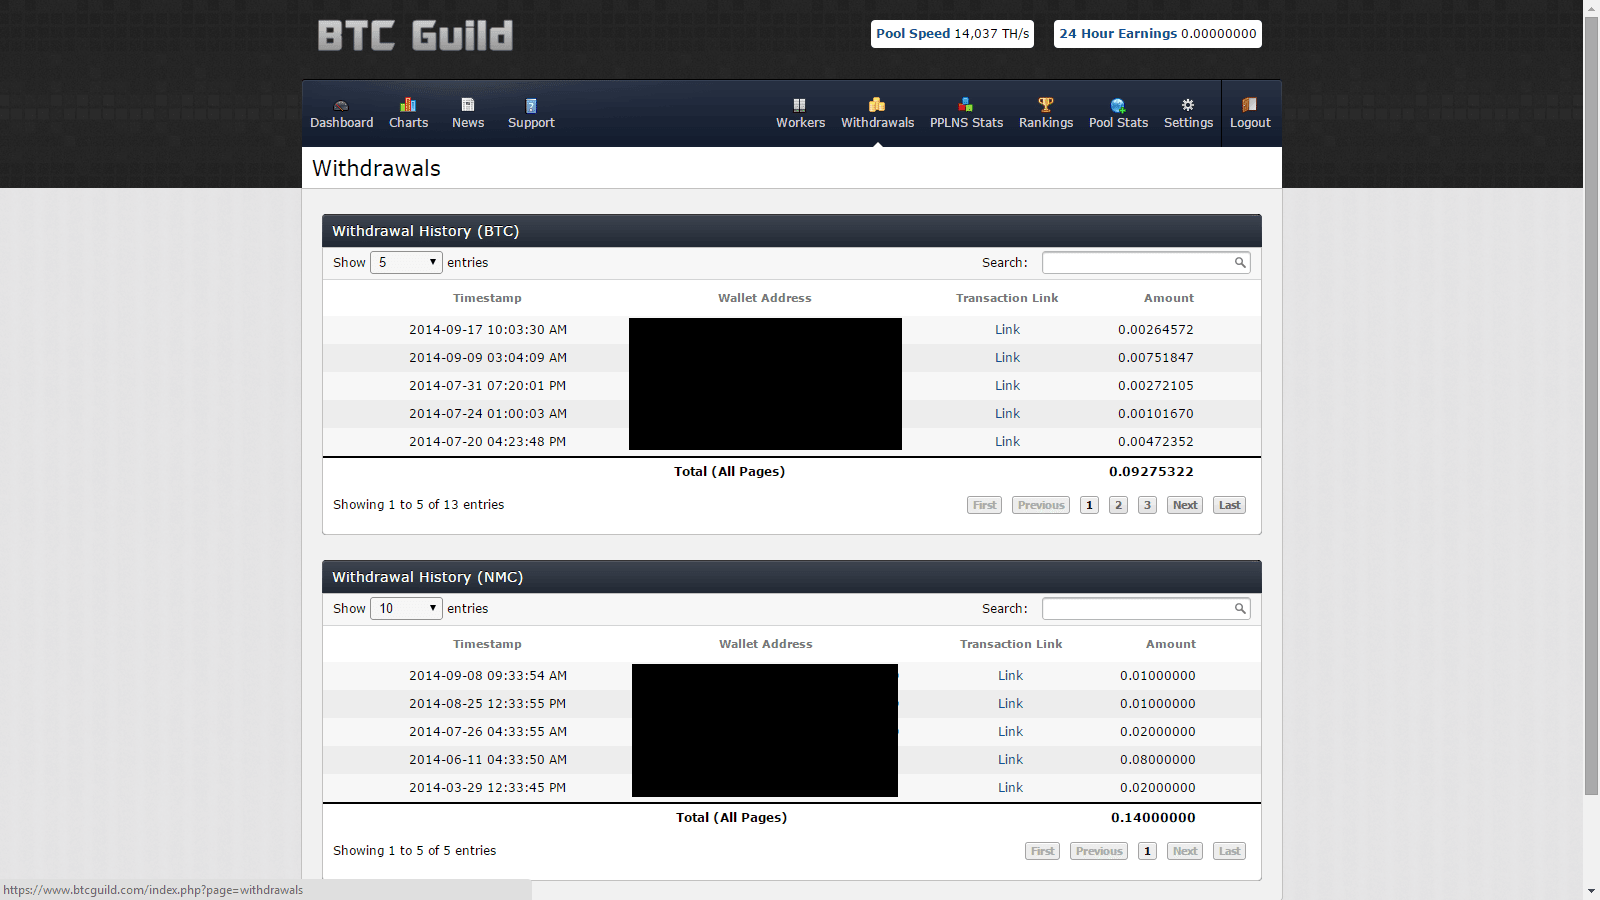 btc guild bitcoin pool